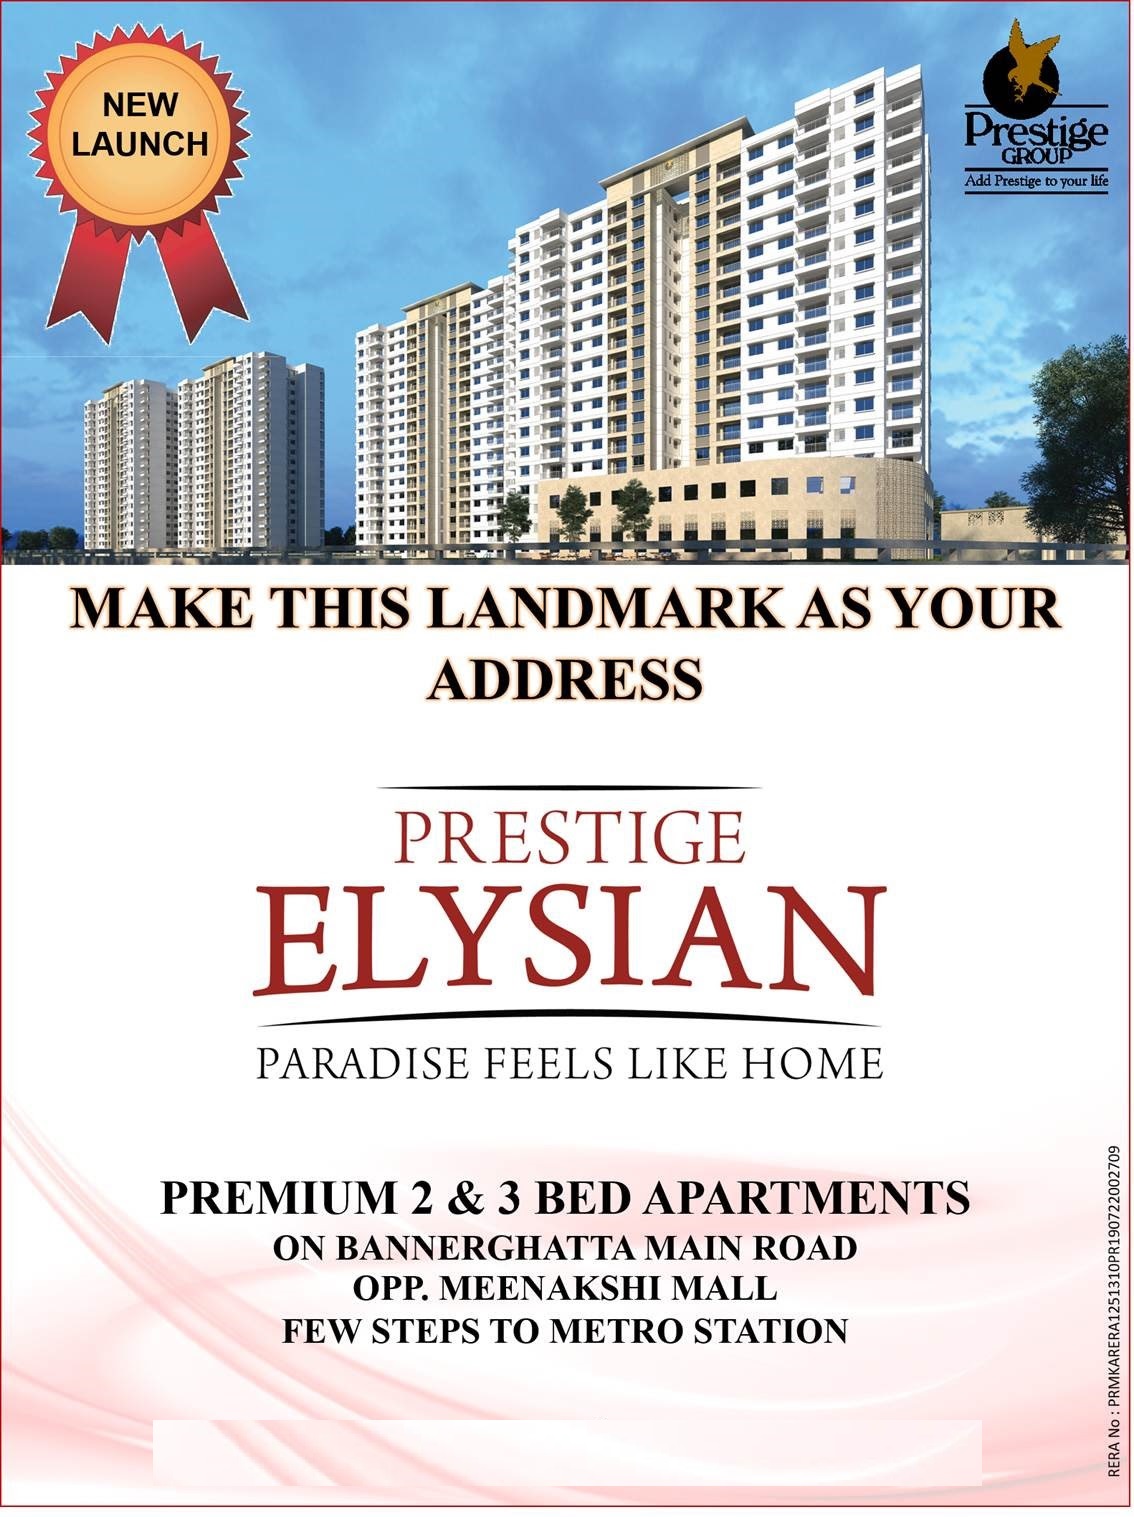 Prestige Elysian premium 2 and 3 bed apartments on Bannerghatta Main Road, Bangalore